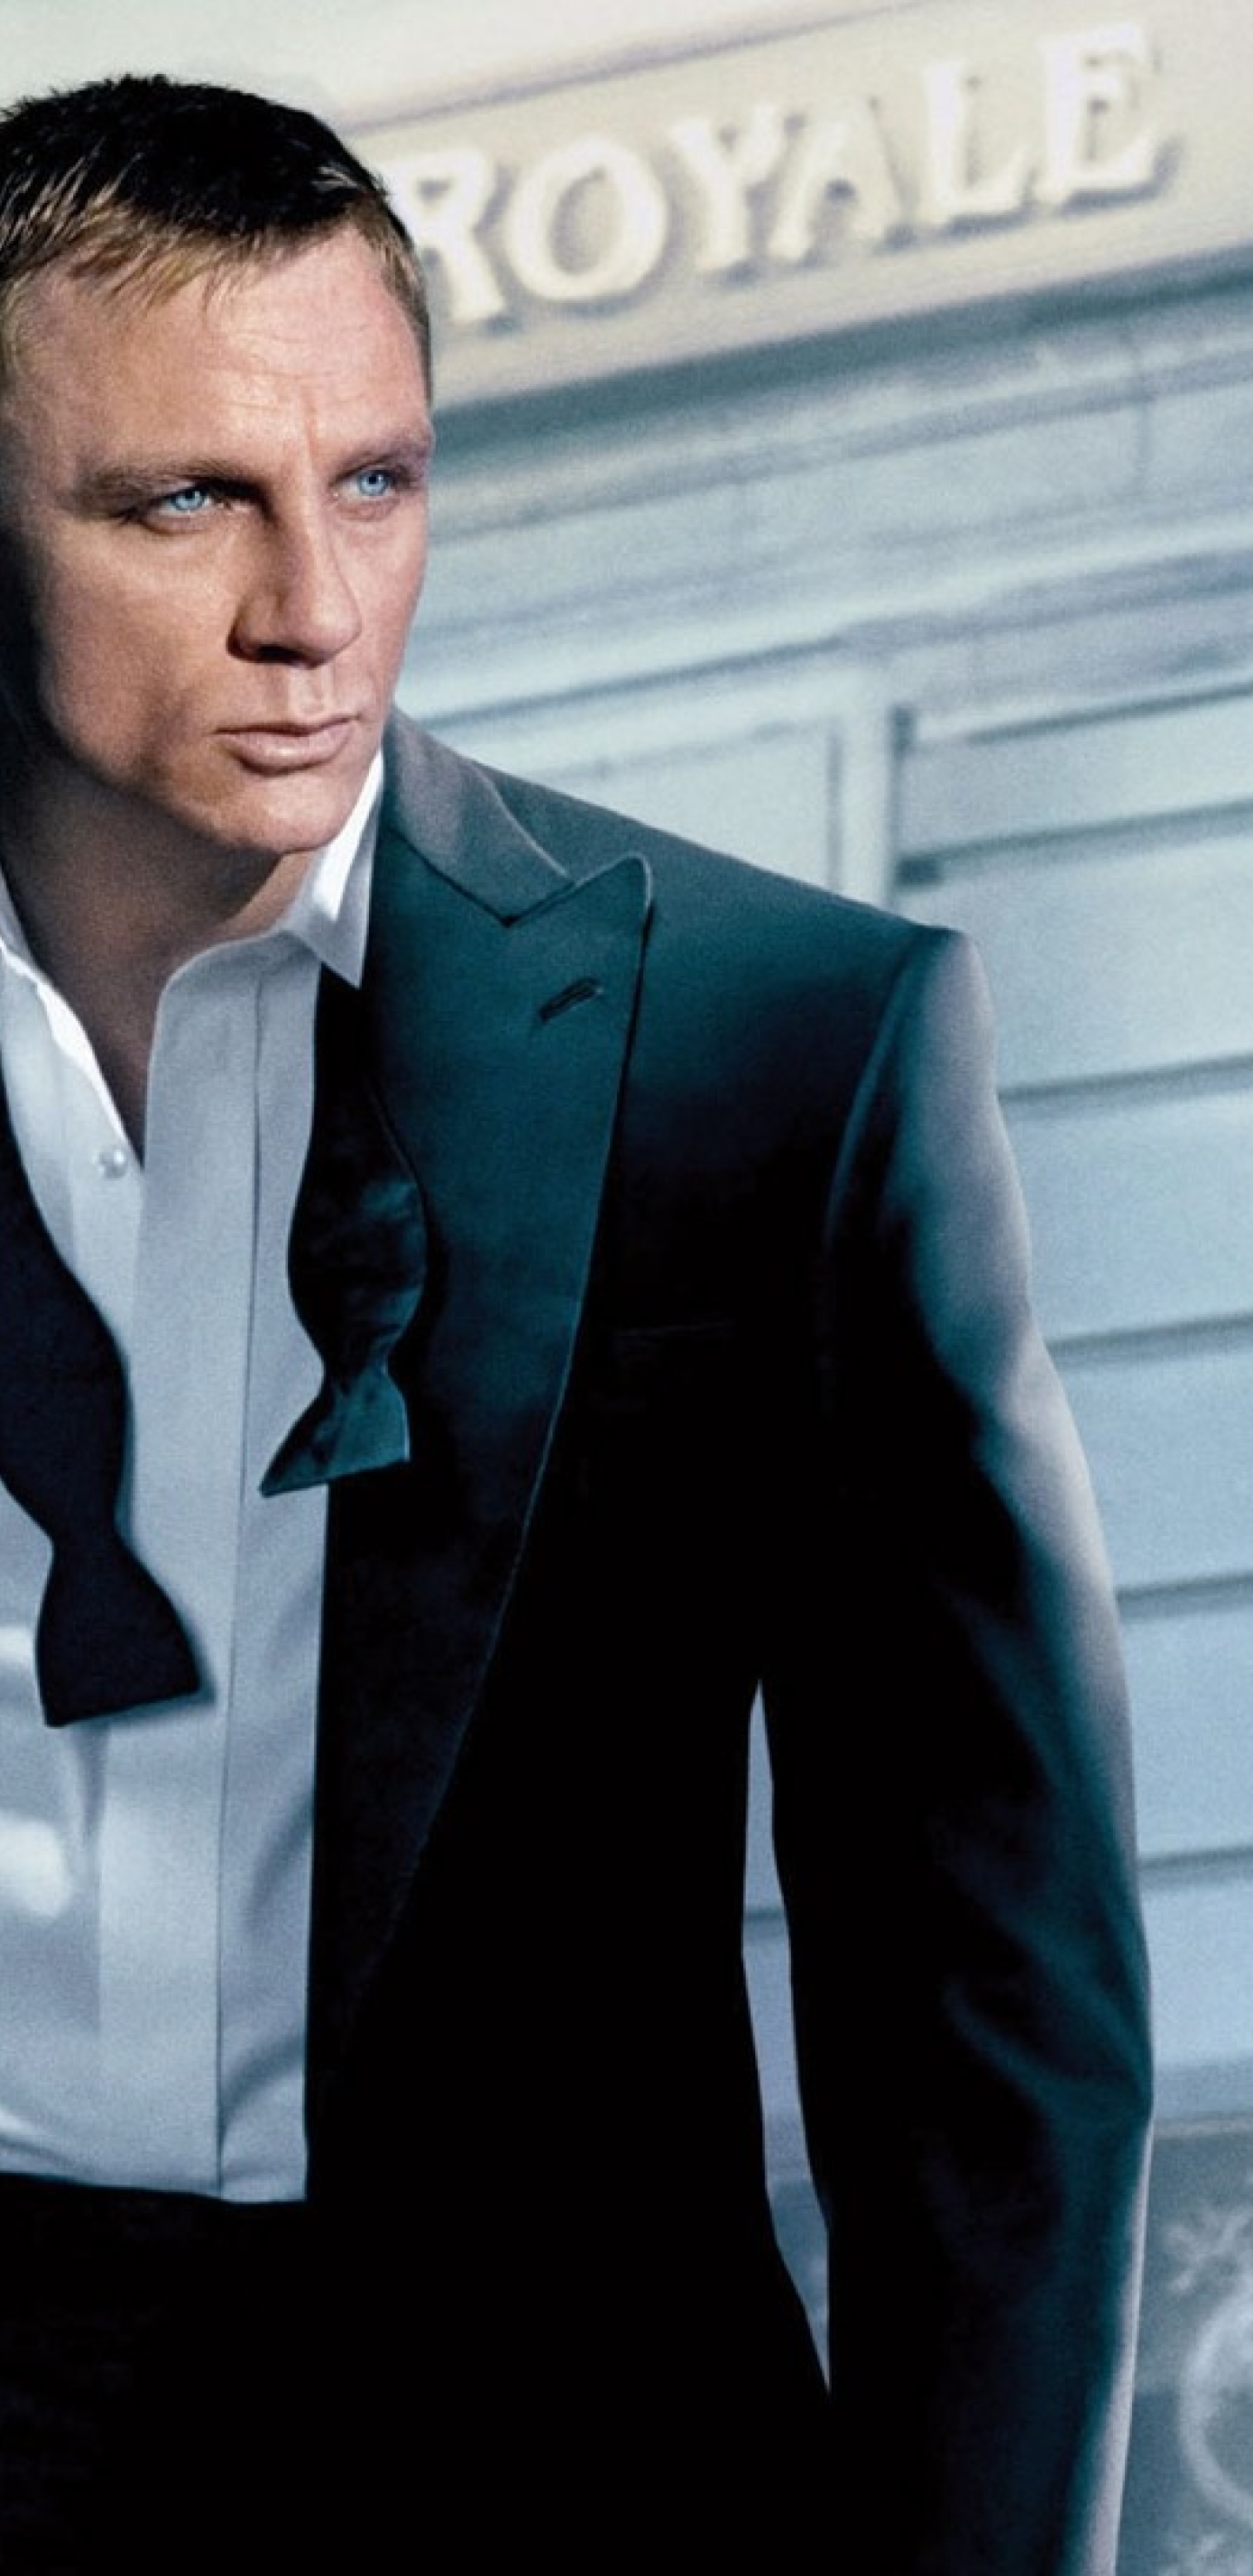 1440x2960 Resolution Daniel Craig as James Bond wallpaper Samsung ...